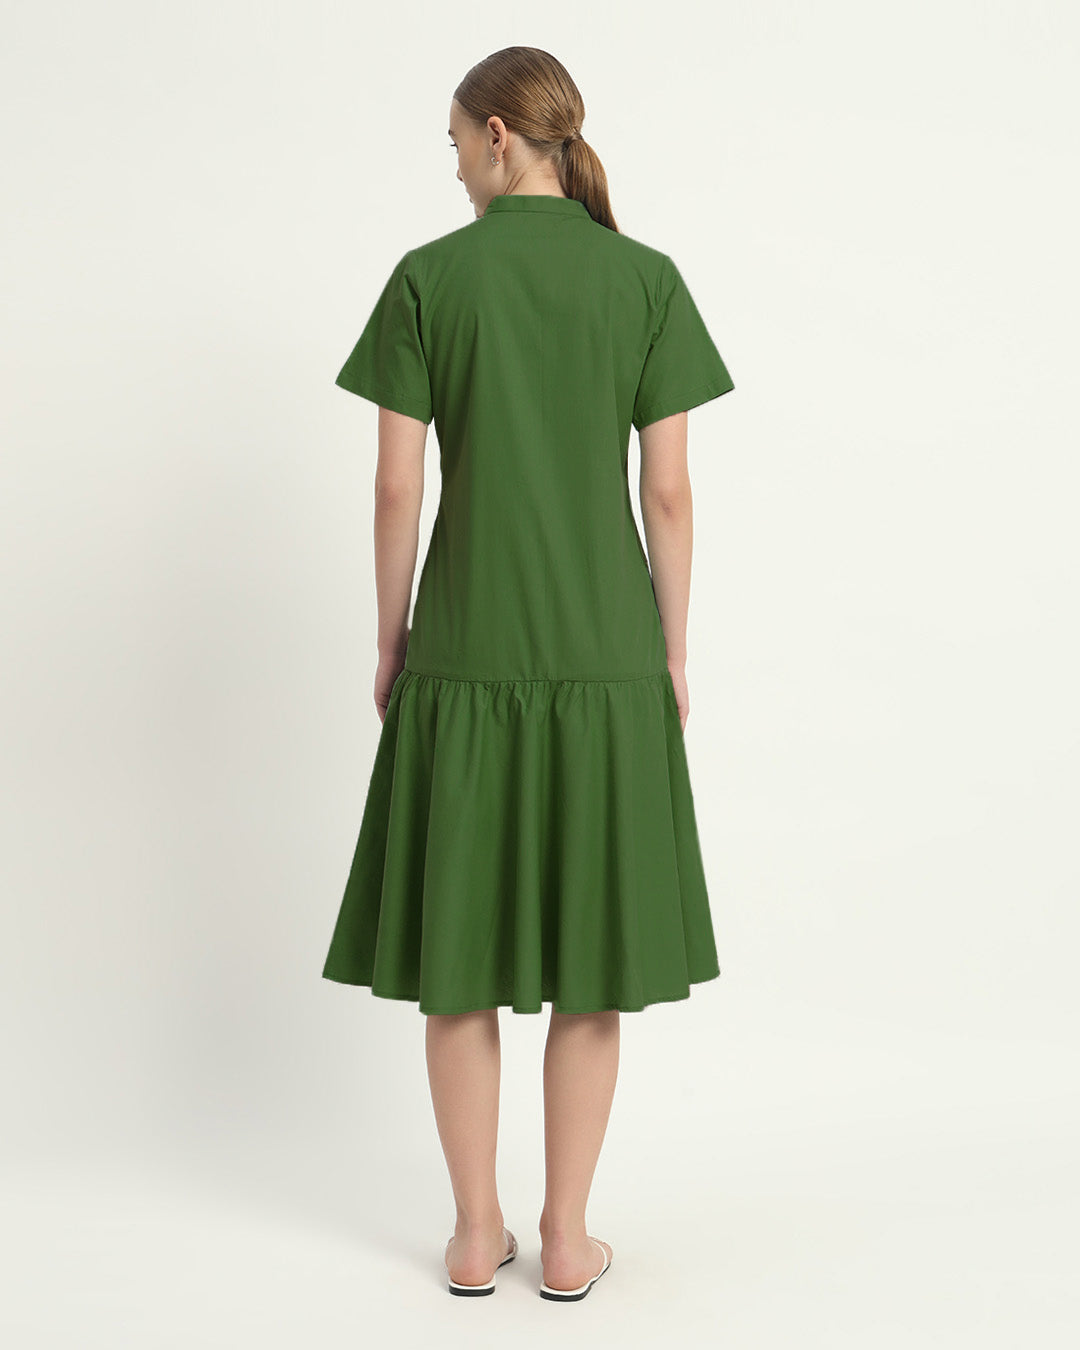 The Emerald Melrose Cotton Dress